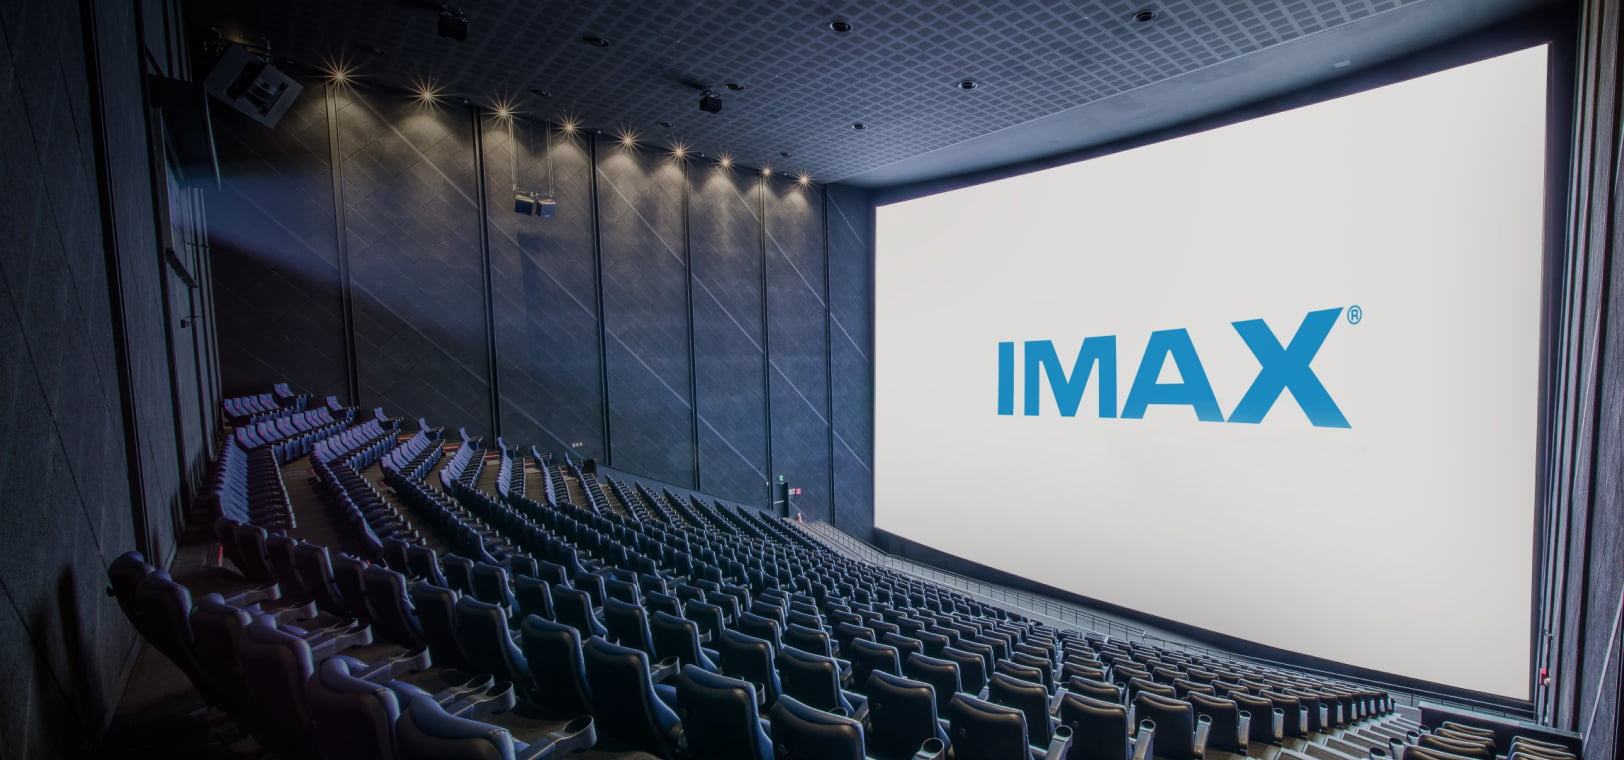 IMAX 이미지